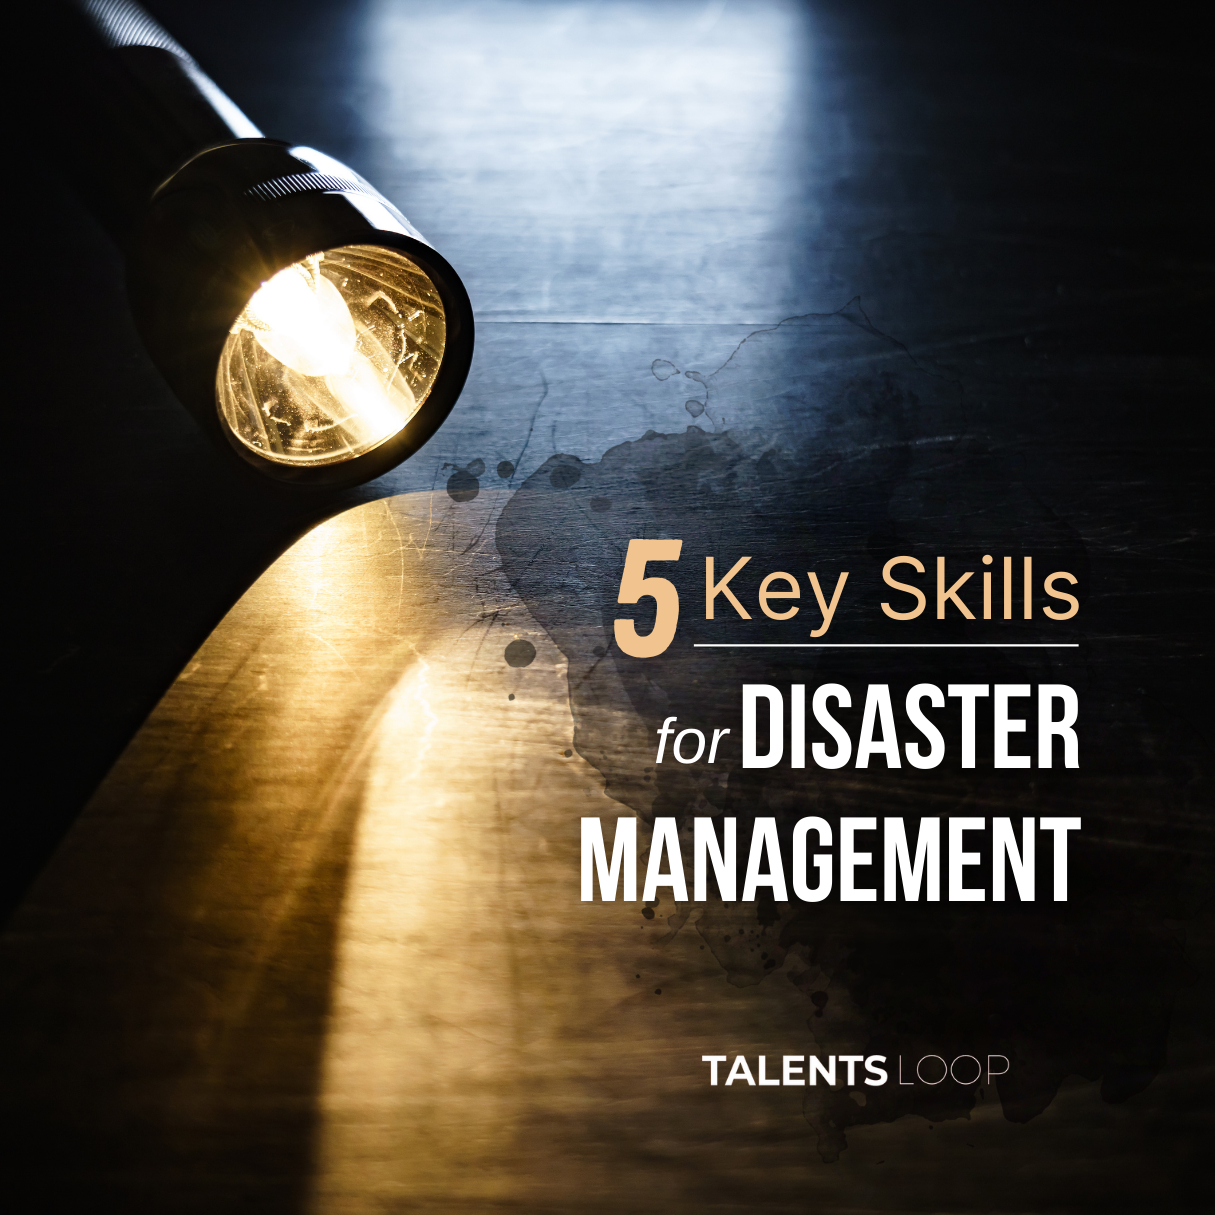 Developing key skills for DISASTER MANAGEMENT